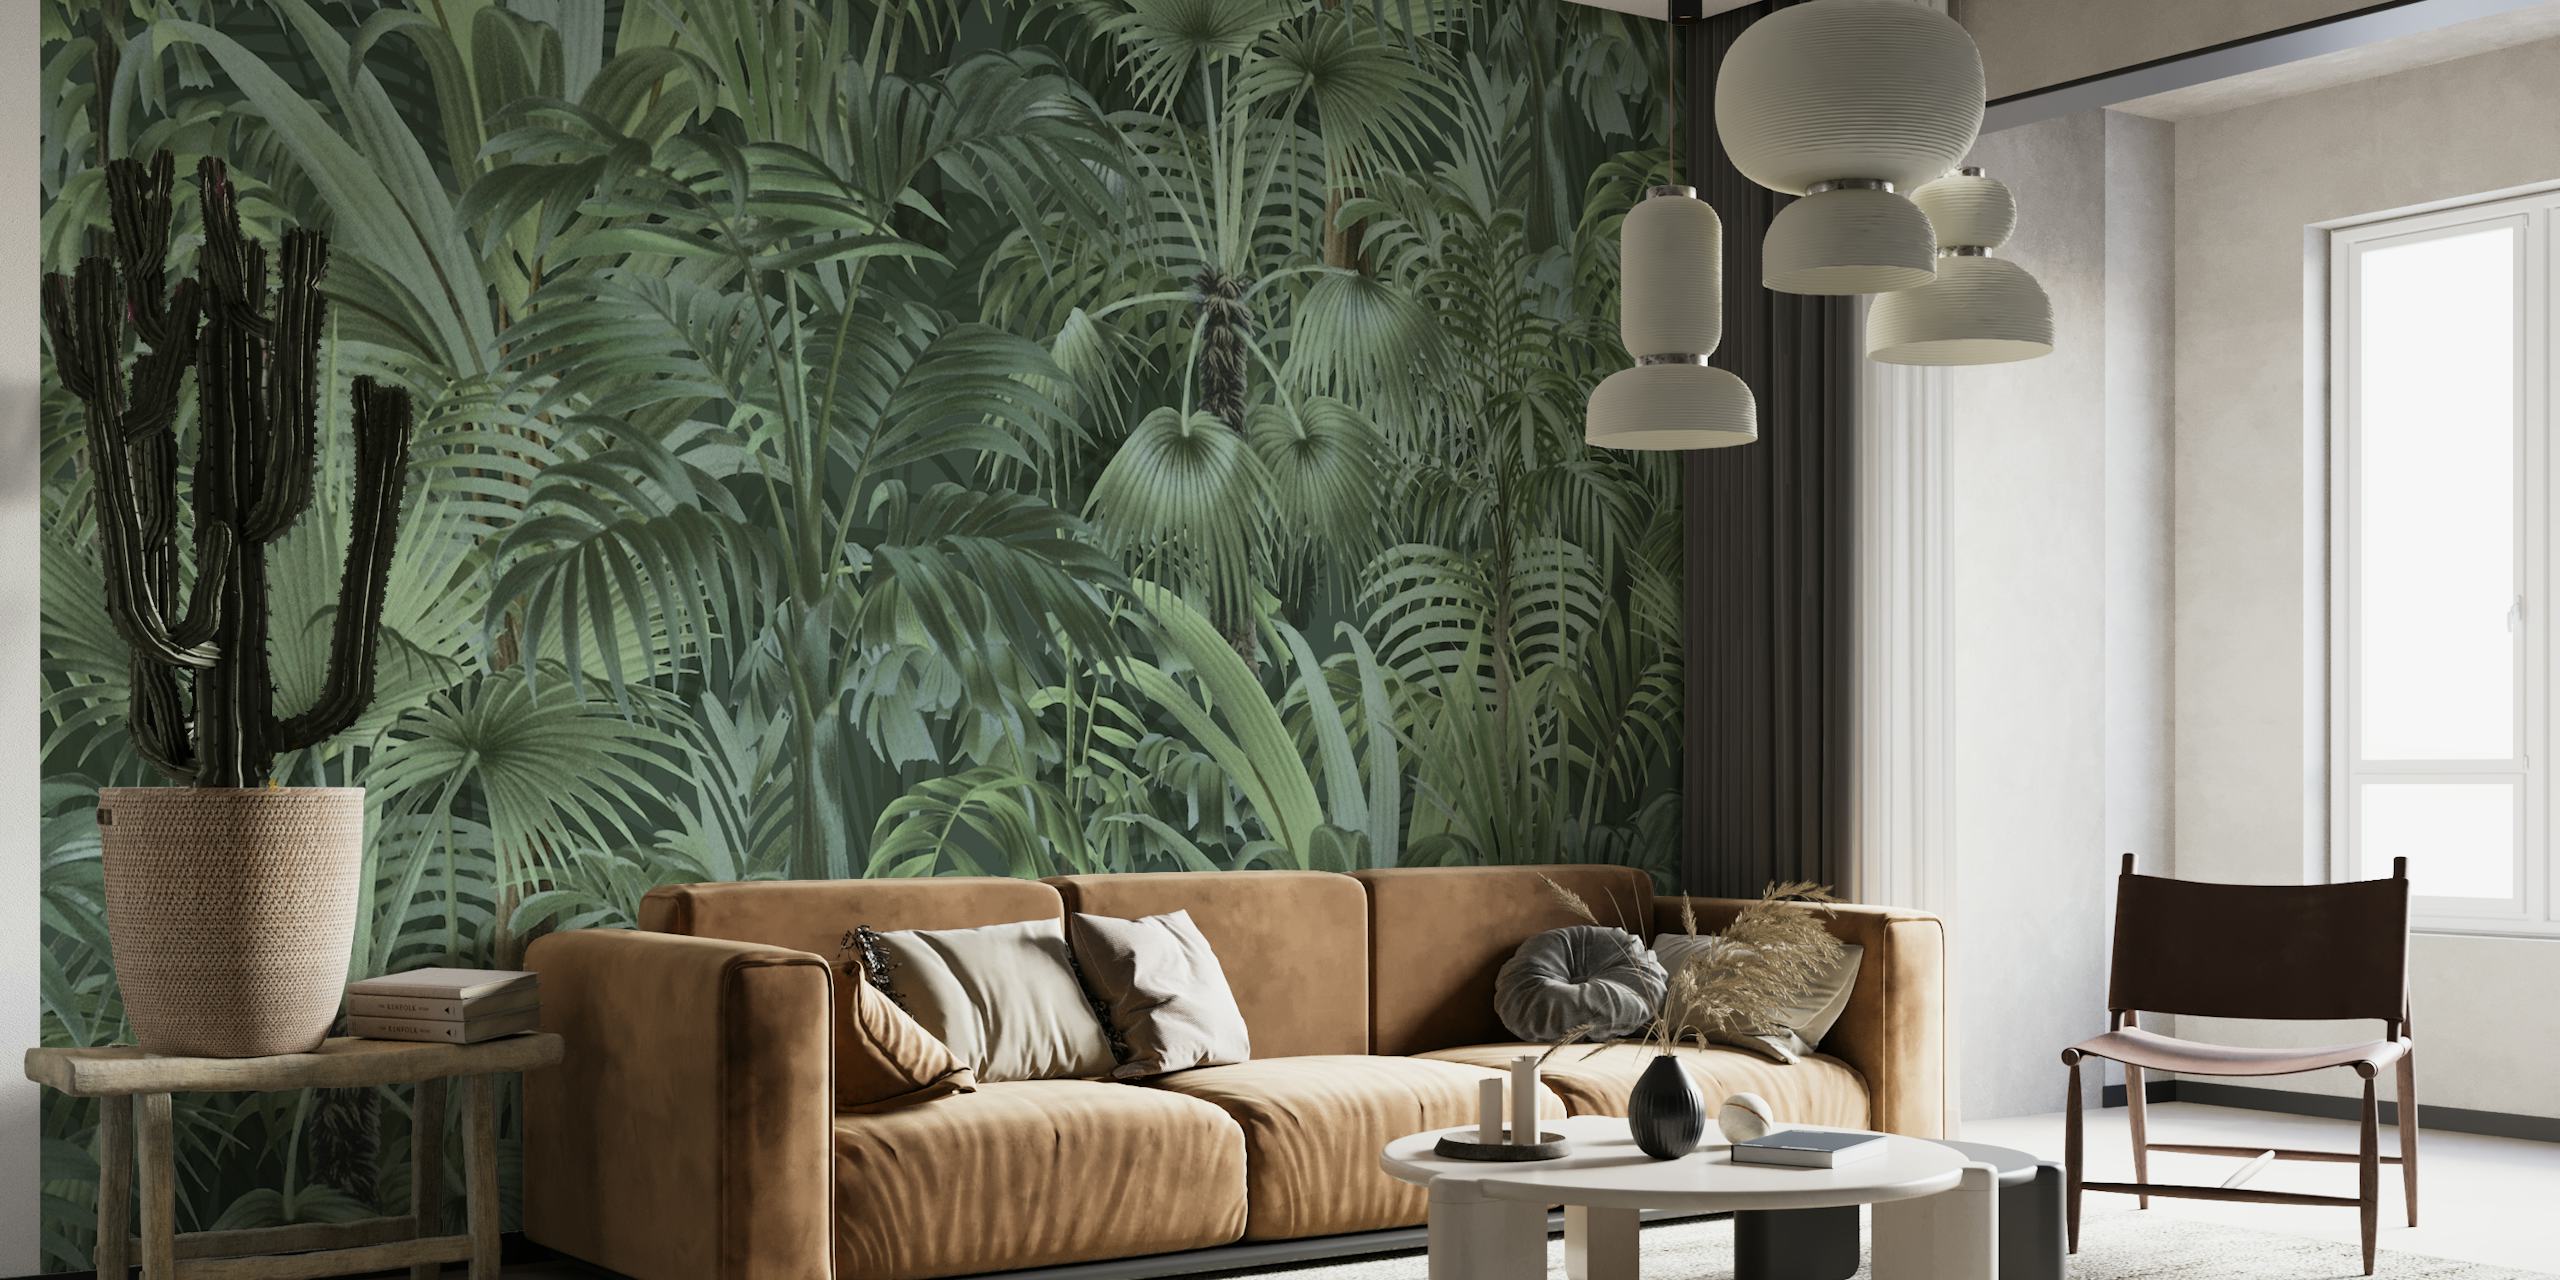 Mural de pared de denso follaje tropical con diferentes tonos de verde, que crea una encantadora atmósfera selvática.